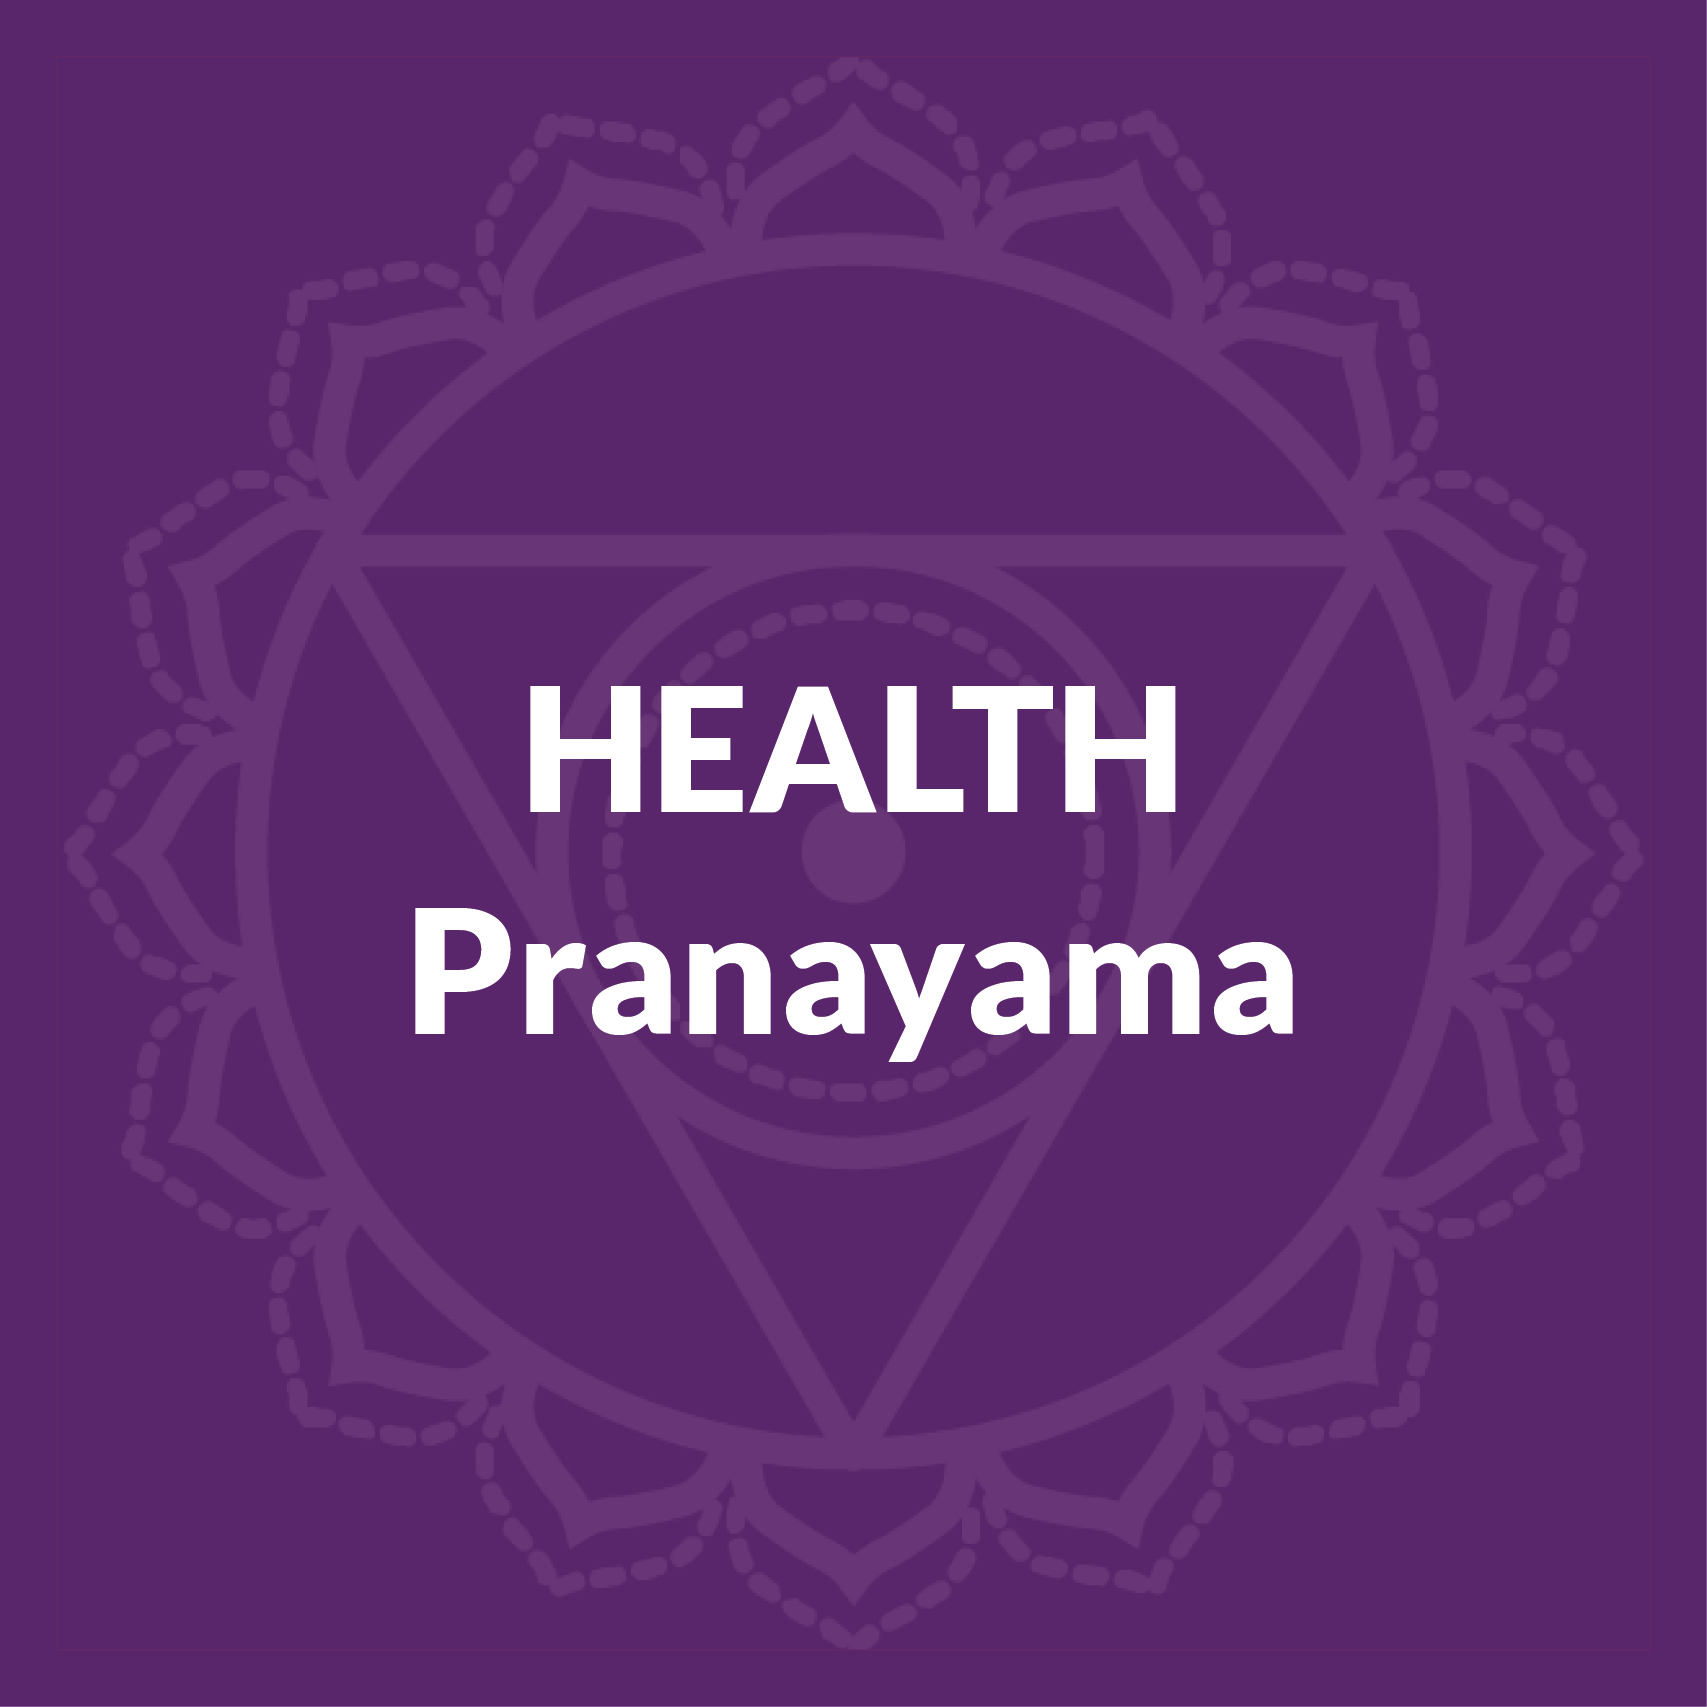 Health Pranayama